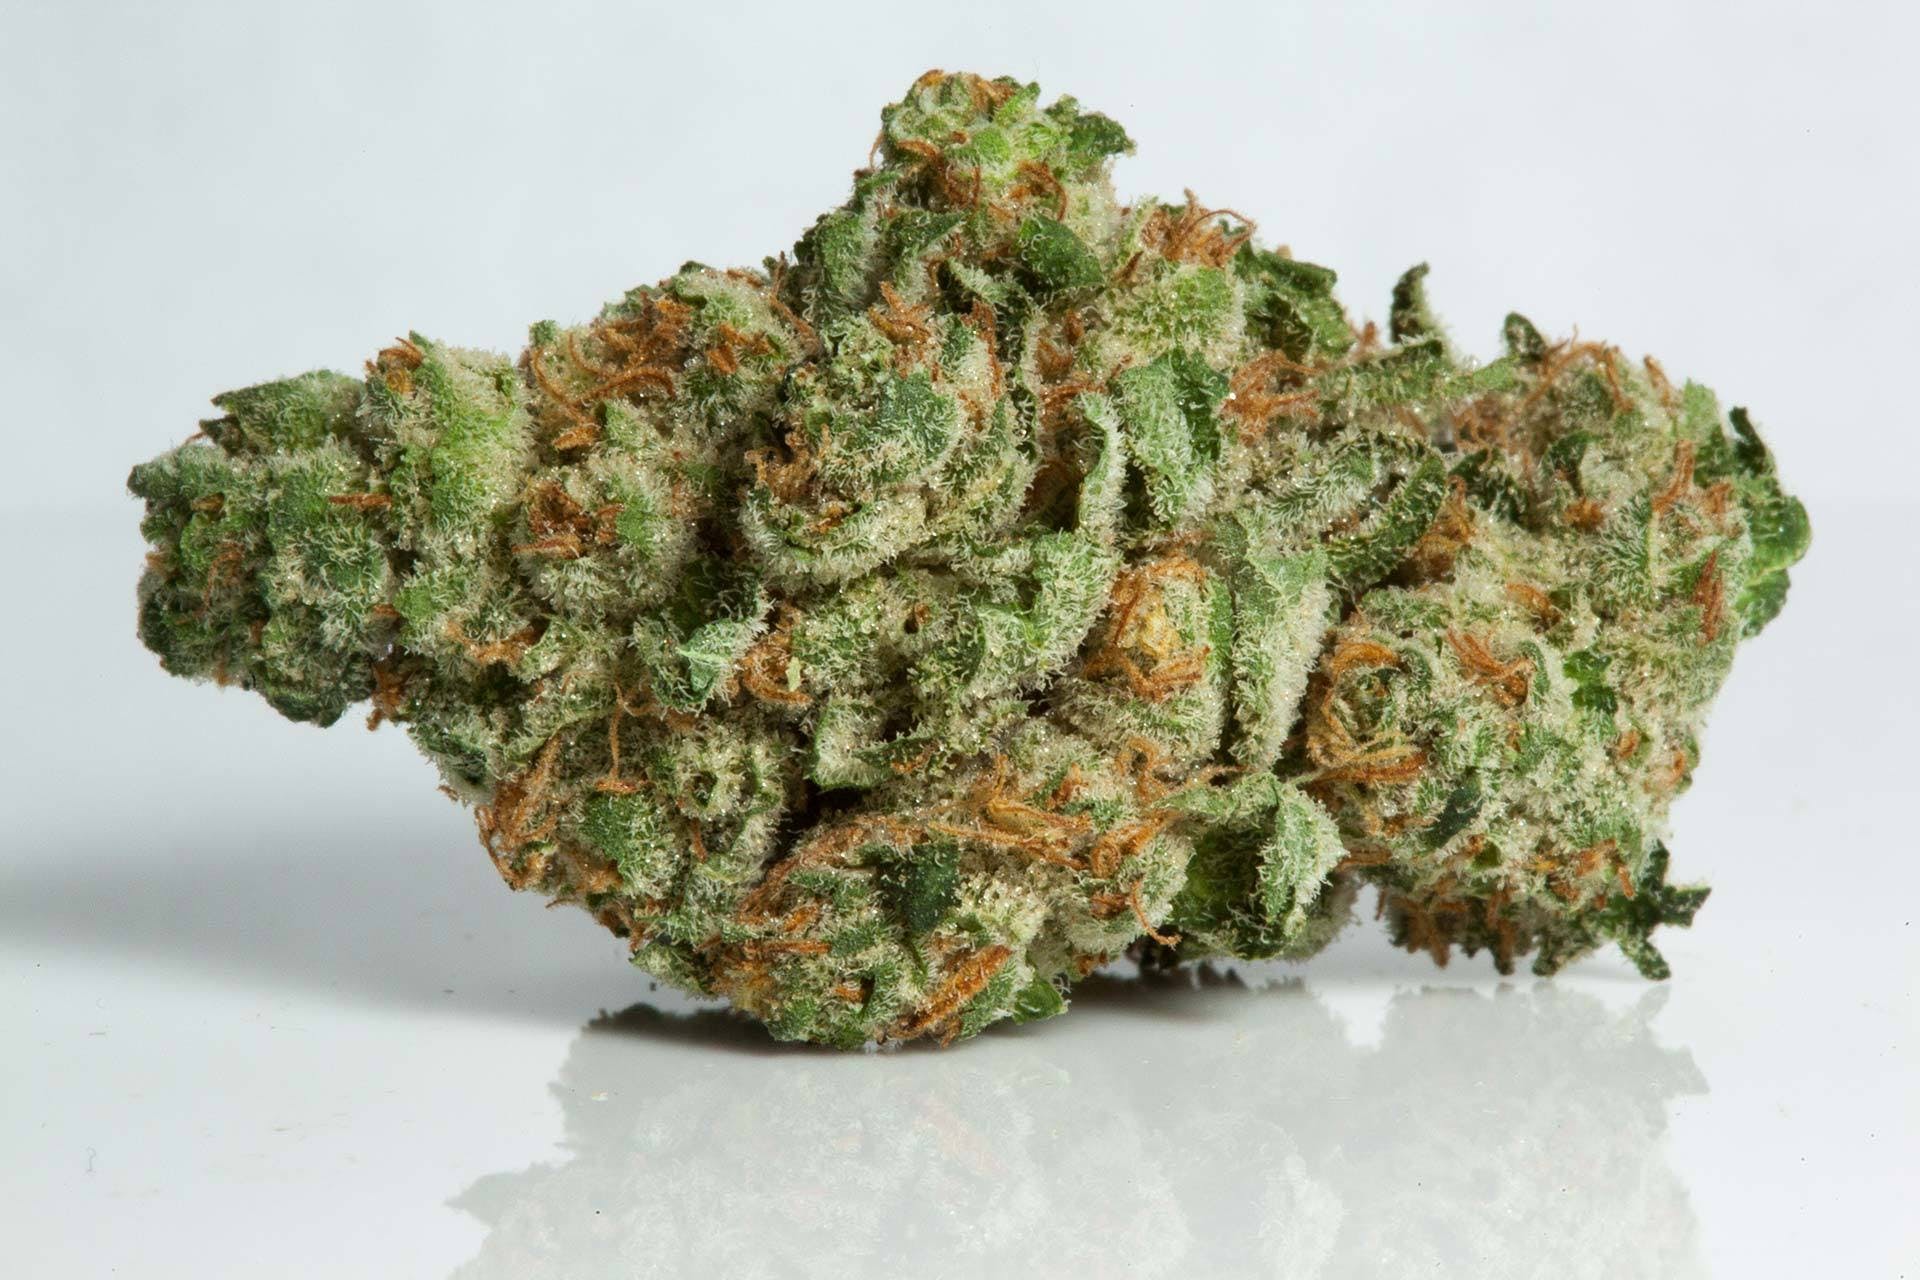 marijuana-dispensaries-14006-ventura-blvd-sherman-oaks-2495-14g-all-top-shelf-strains-21-21-21